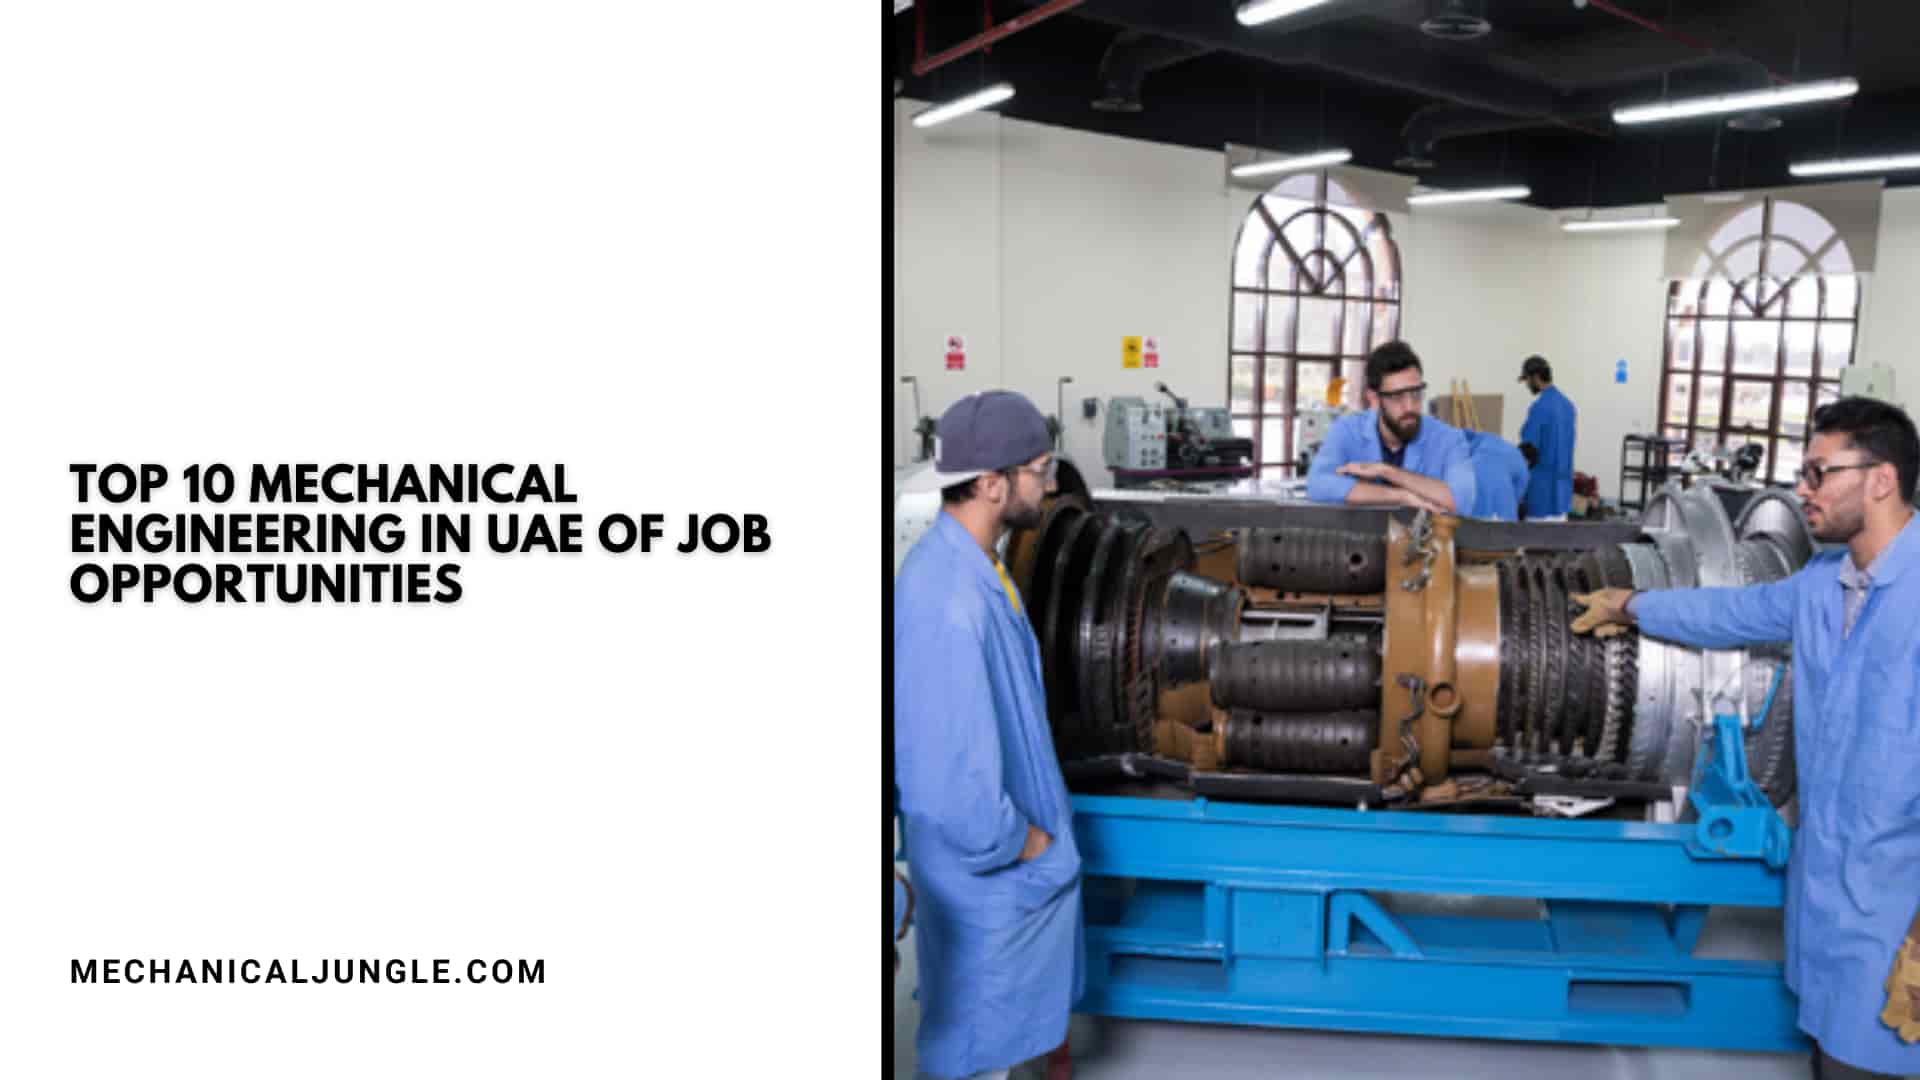 Top 10 Mechanical Engineering in UAE of Job Opportunities: